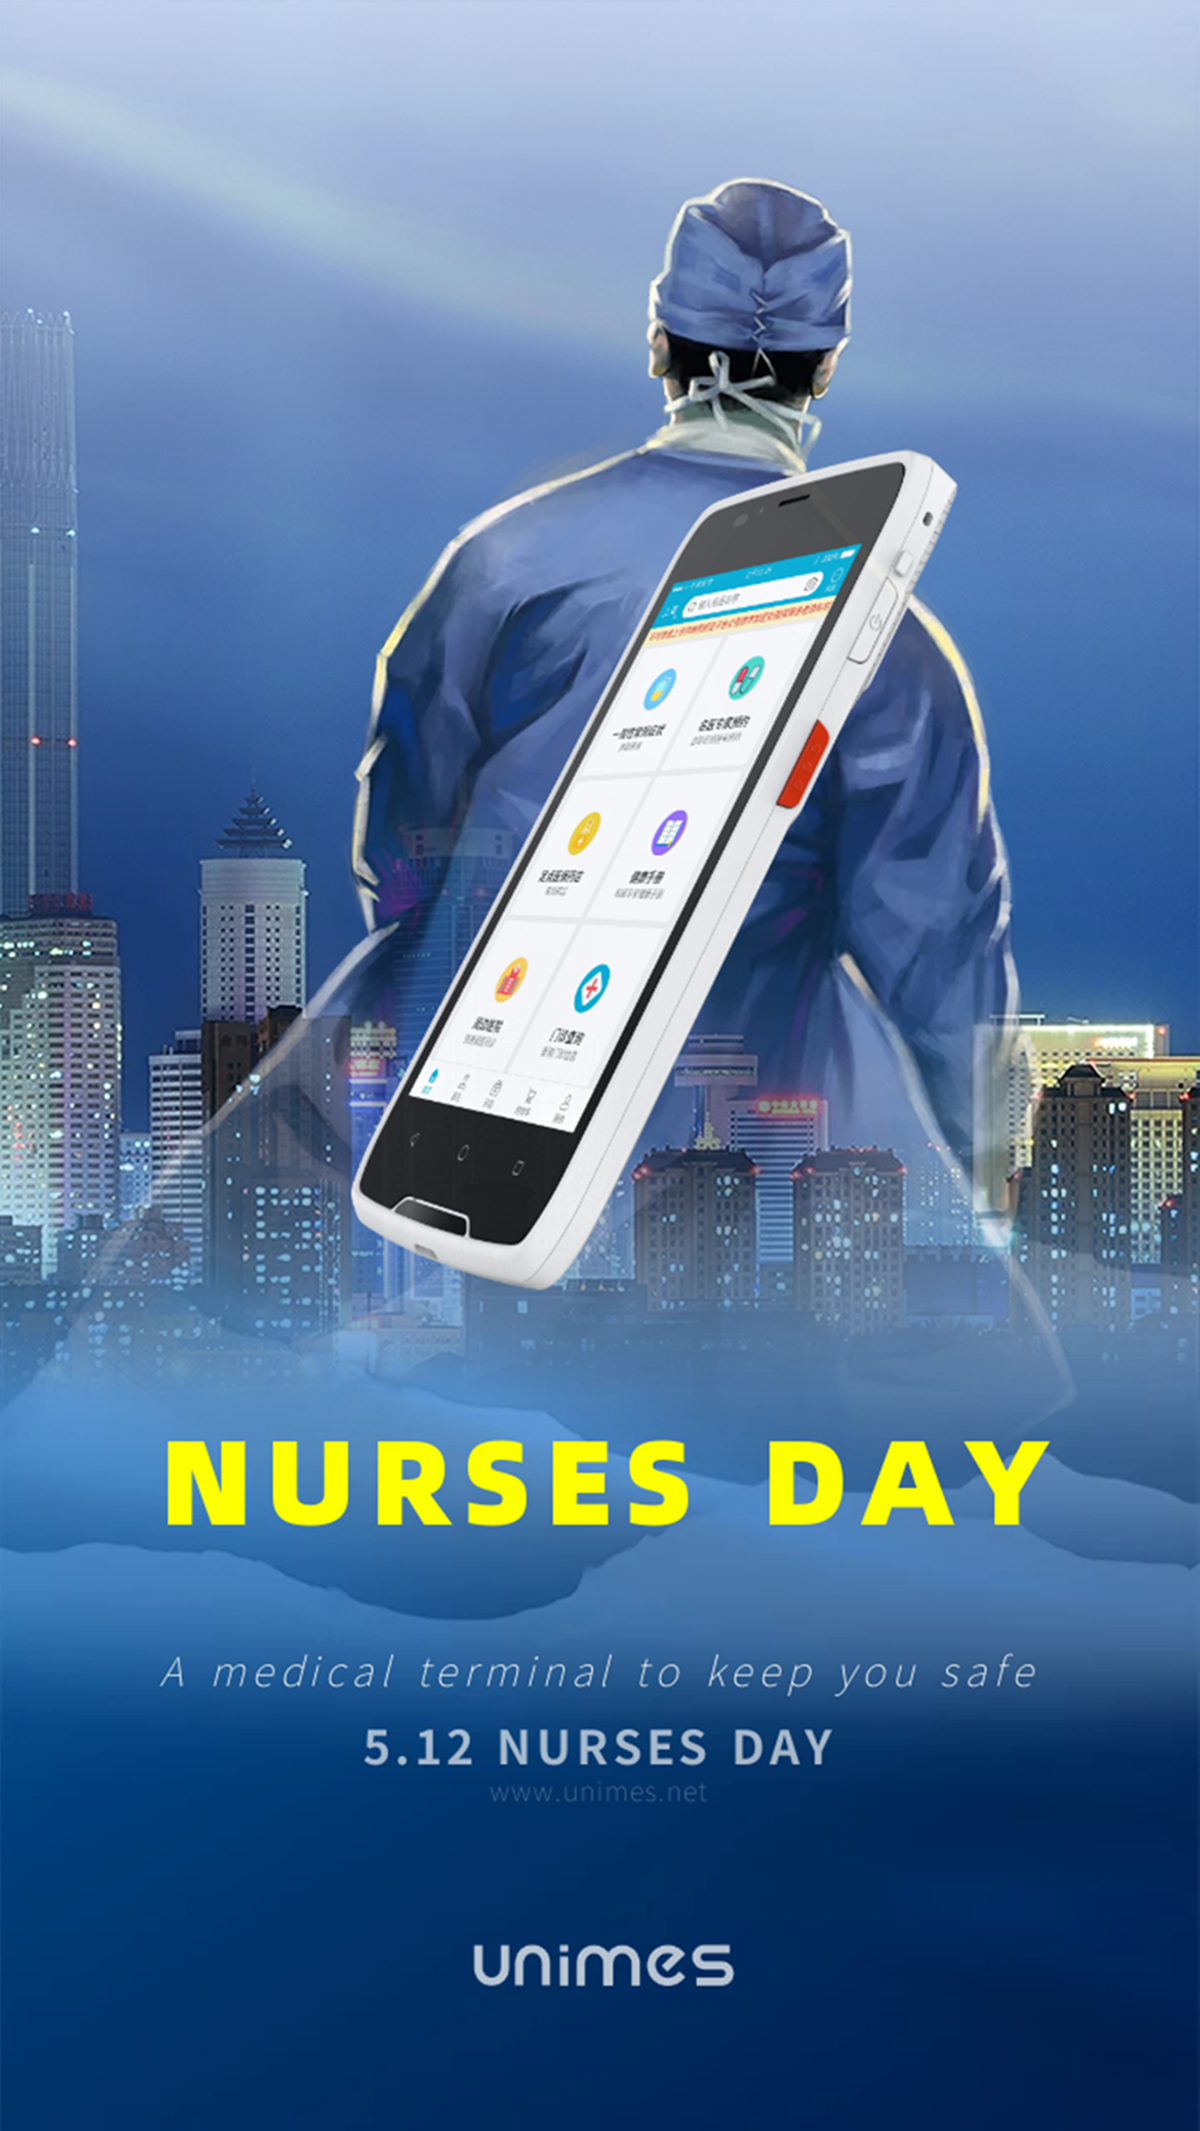 Happy Nurses' Day 2021 from Unimes